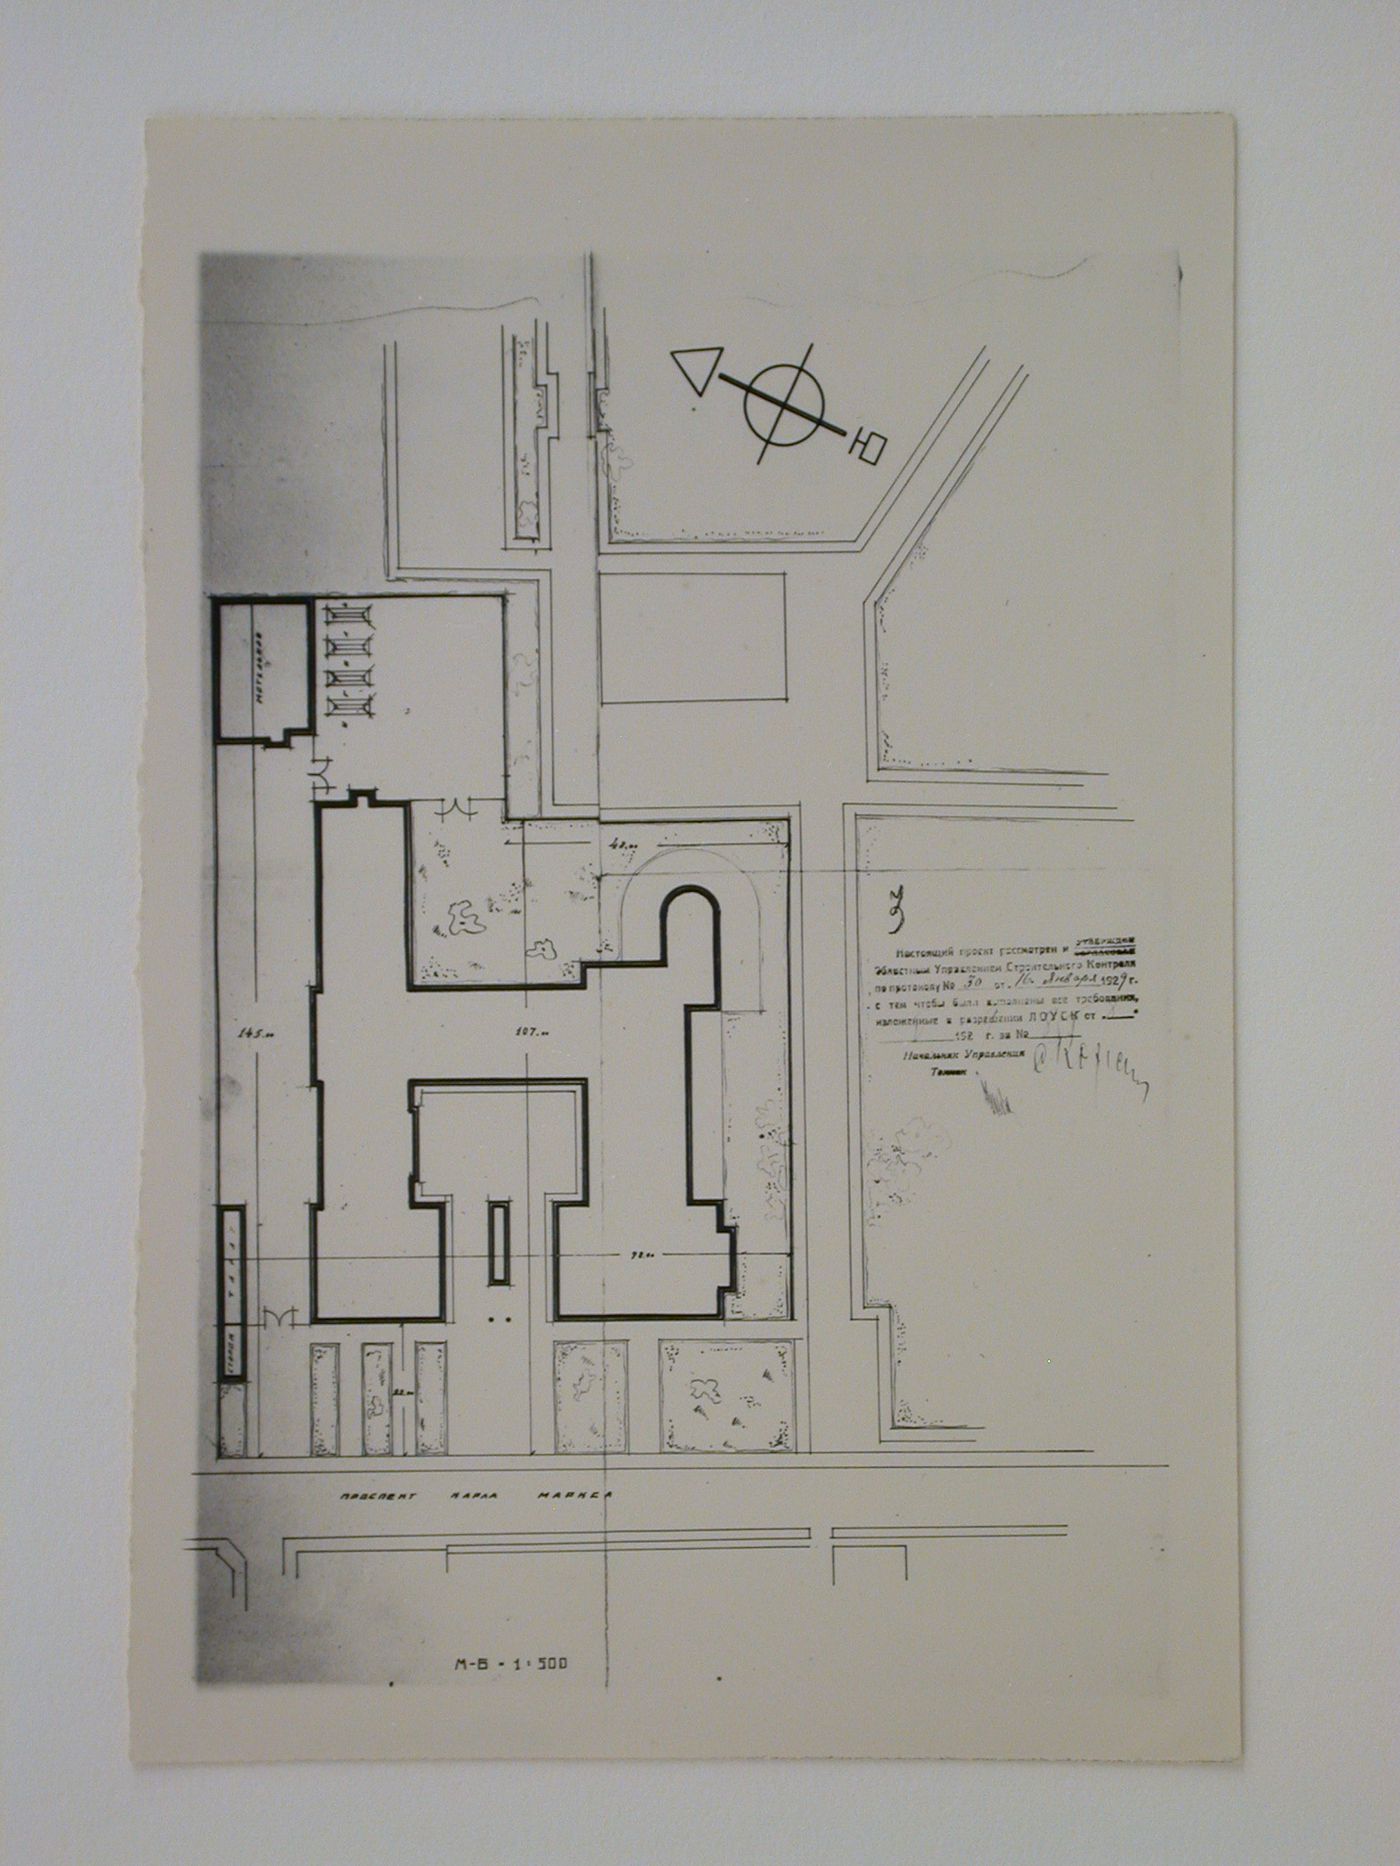 Photograph of a site plan for Vyborgskaya Mechanized Canteen, Leningrad (now Saint Petersburg)